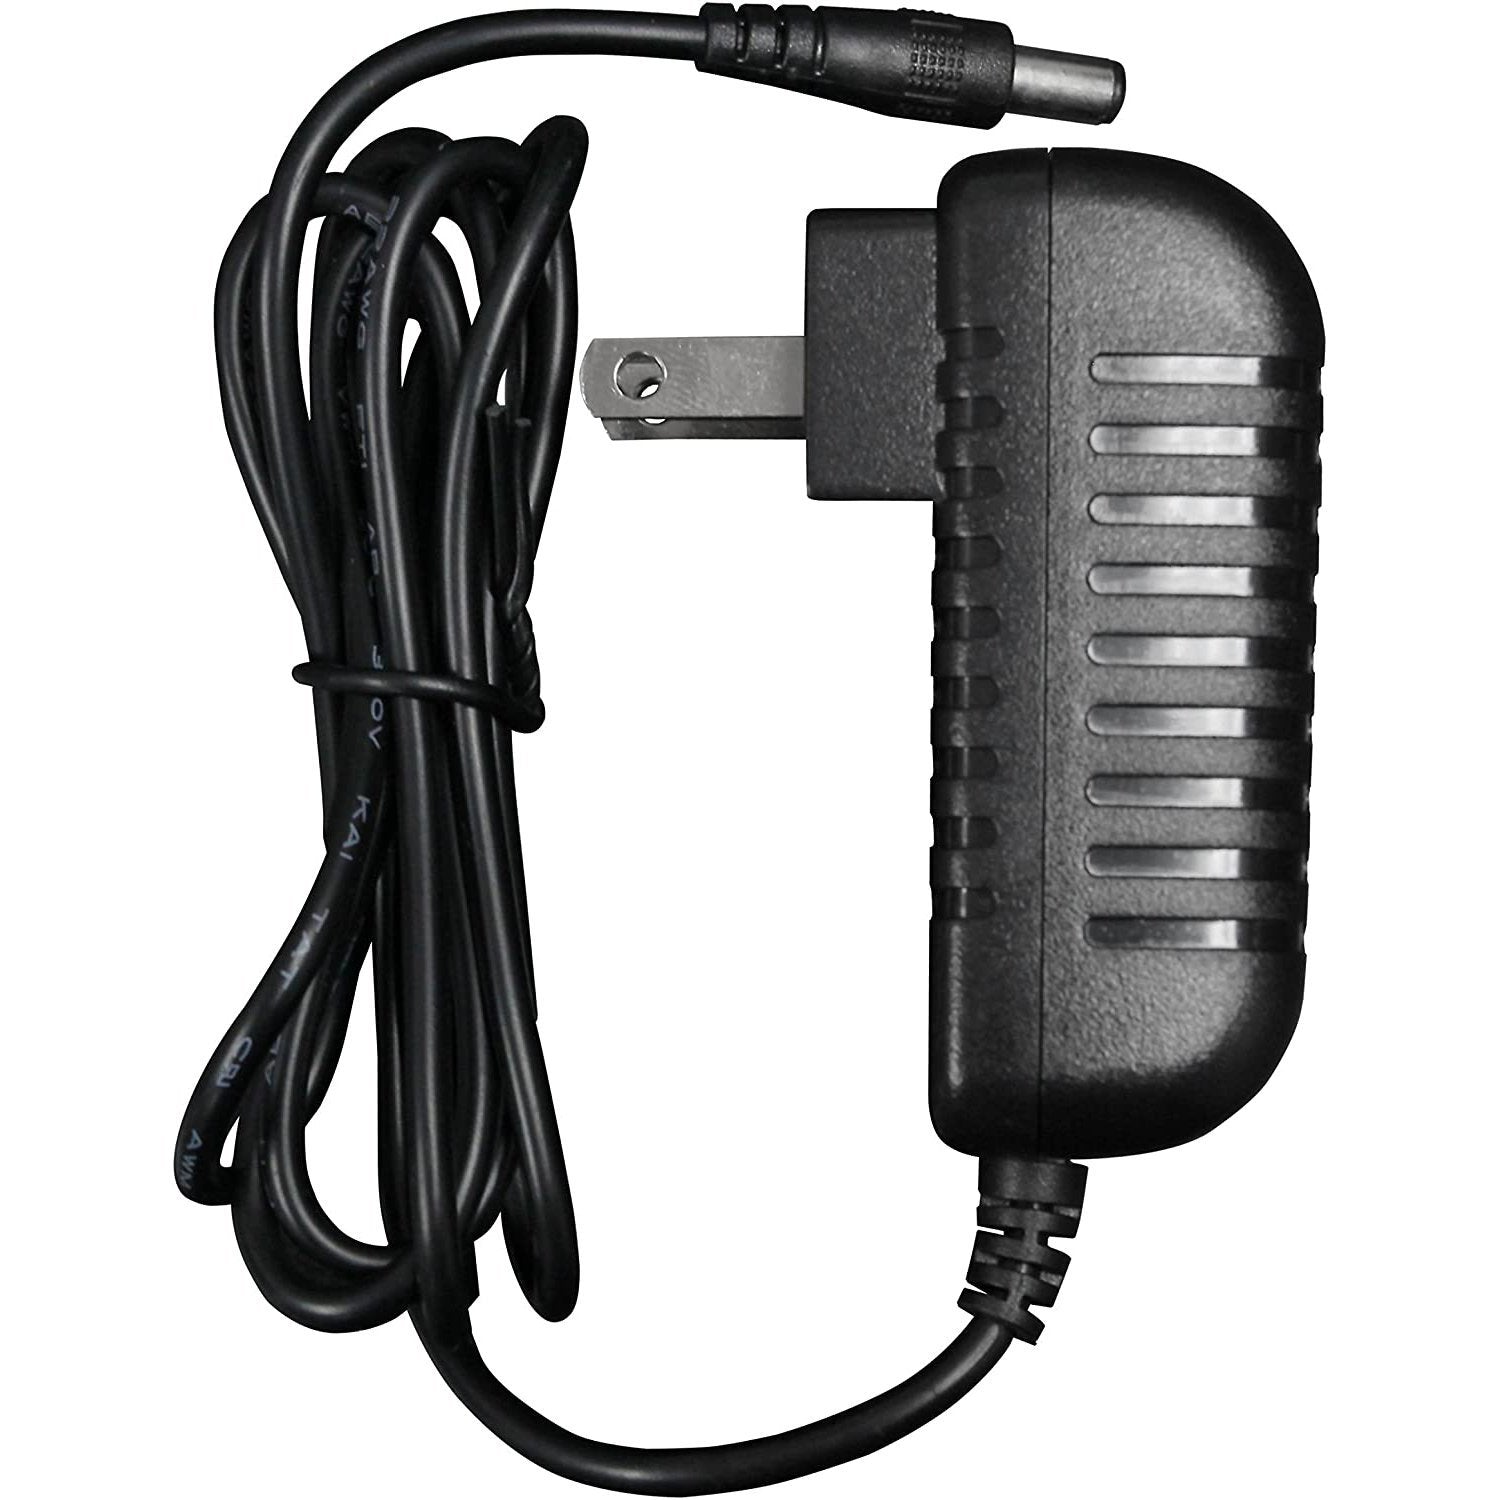 5V Power Adapter for Digital Converters, Radios, Home Appliances & Gadgets